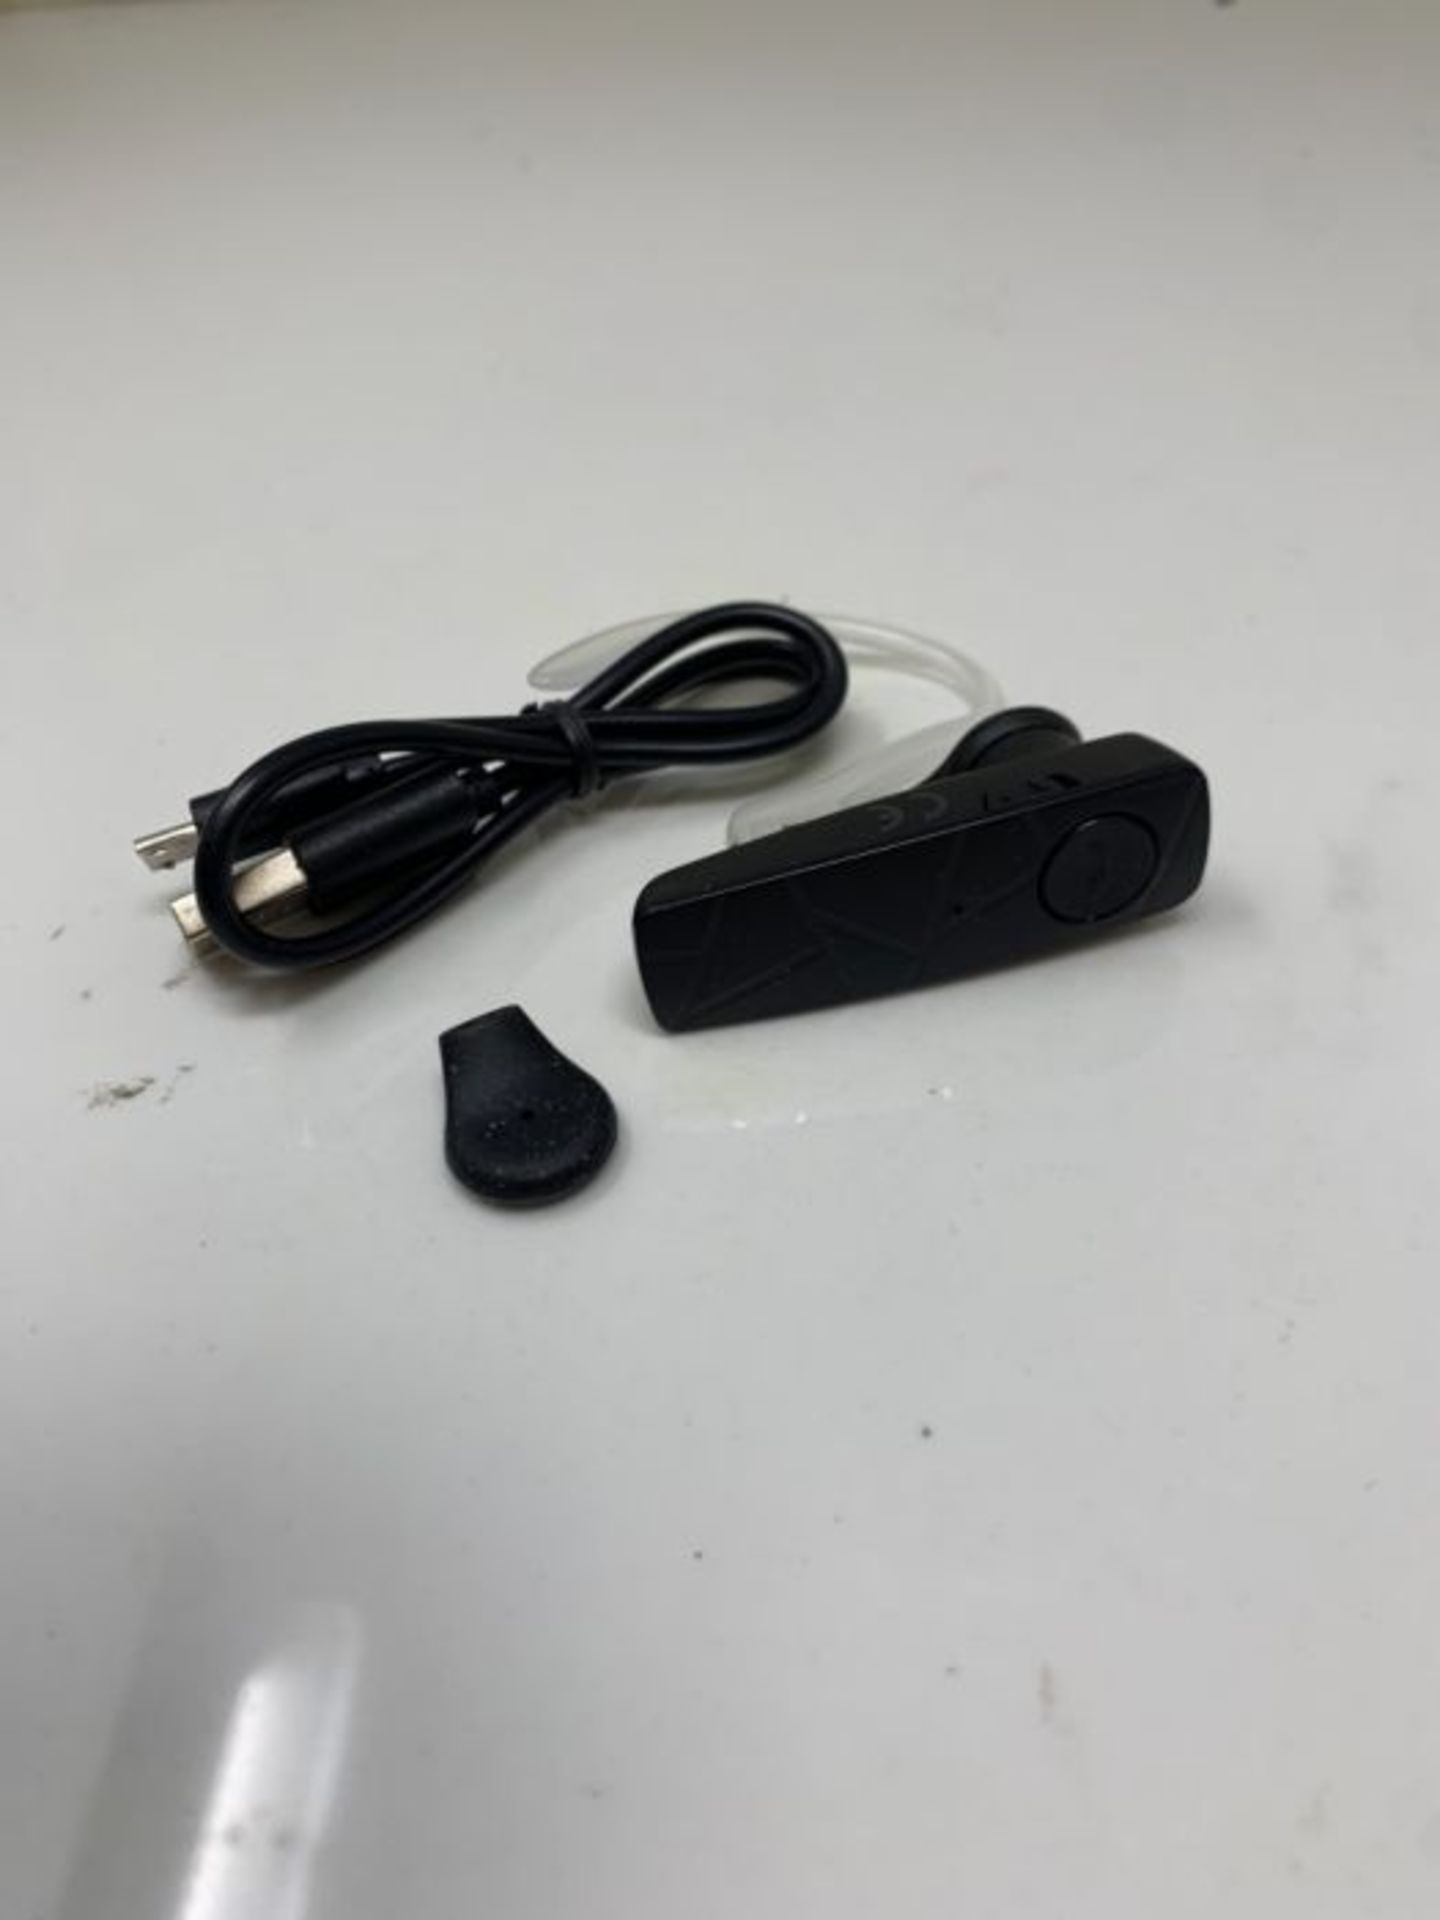 TELLUR Vox 55 Bluetooth Headset, Multipoint, Black - Image 3 of 3